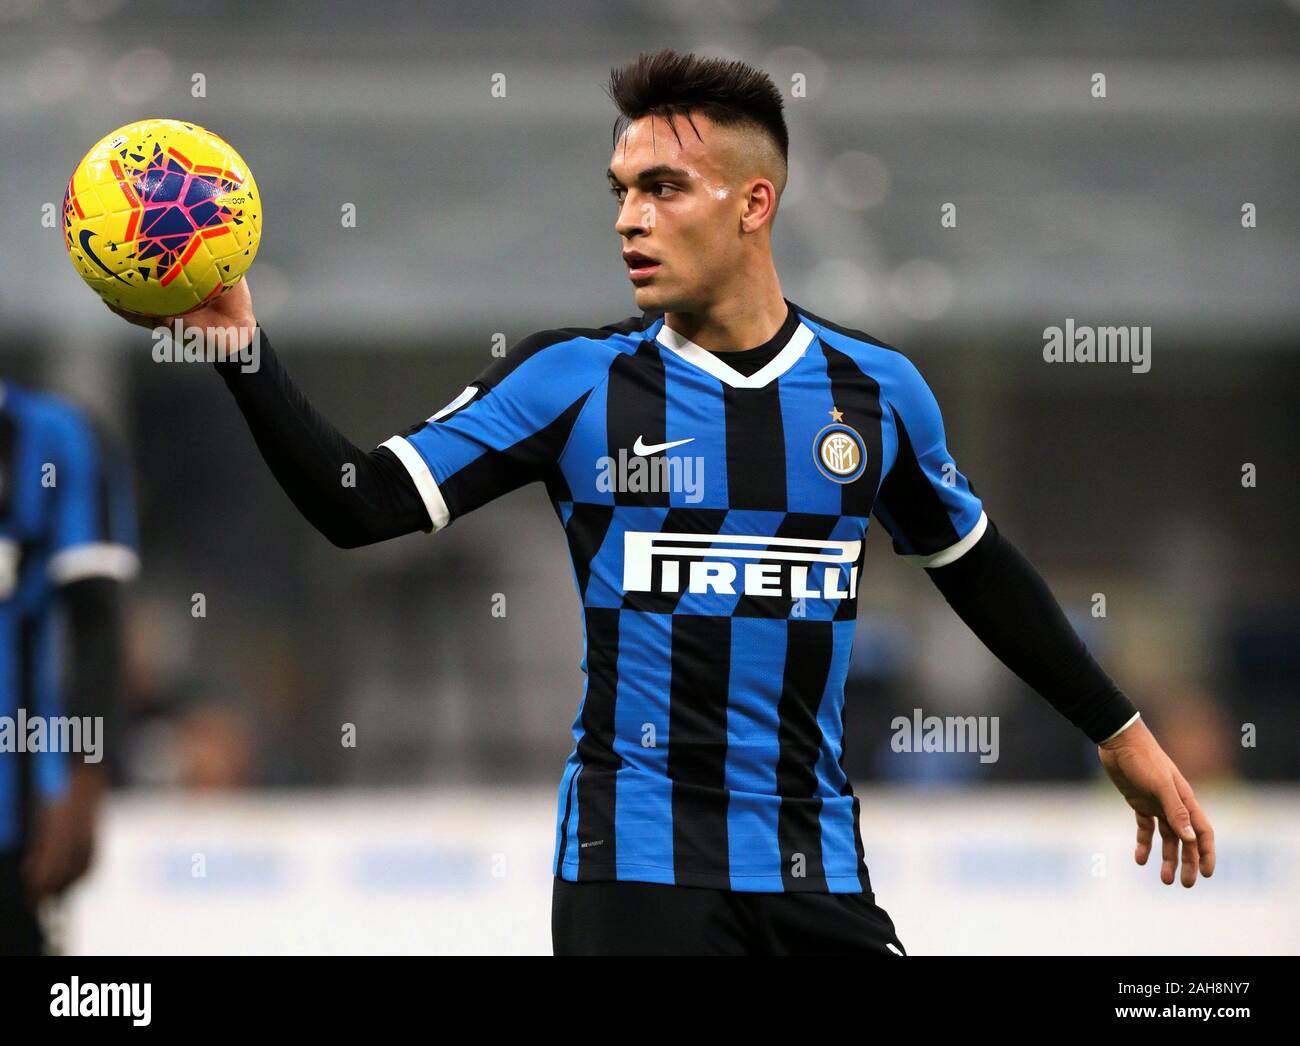 Milan, ITALIE - décembre 06, 2019: Lautaro Martinez regarde le ballon pendant la série A 2019/2020 INTER / ROMA au stade San Siro. Banque D'Images